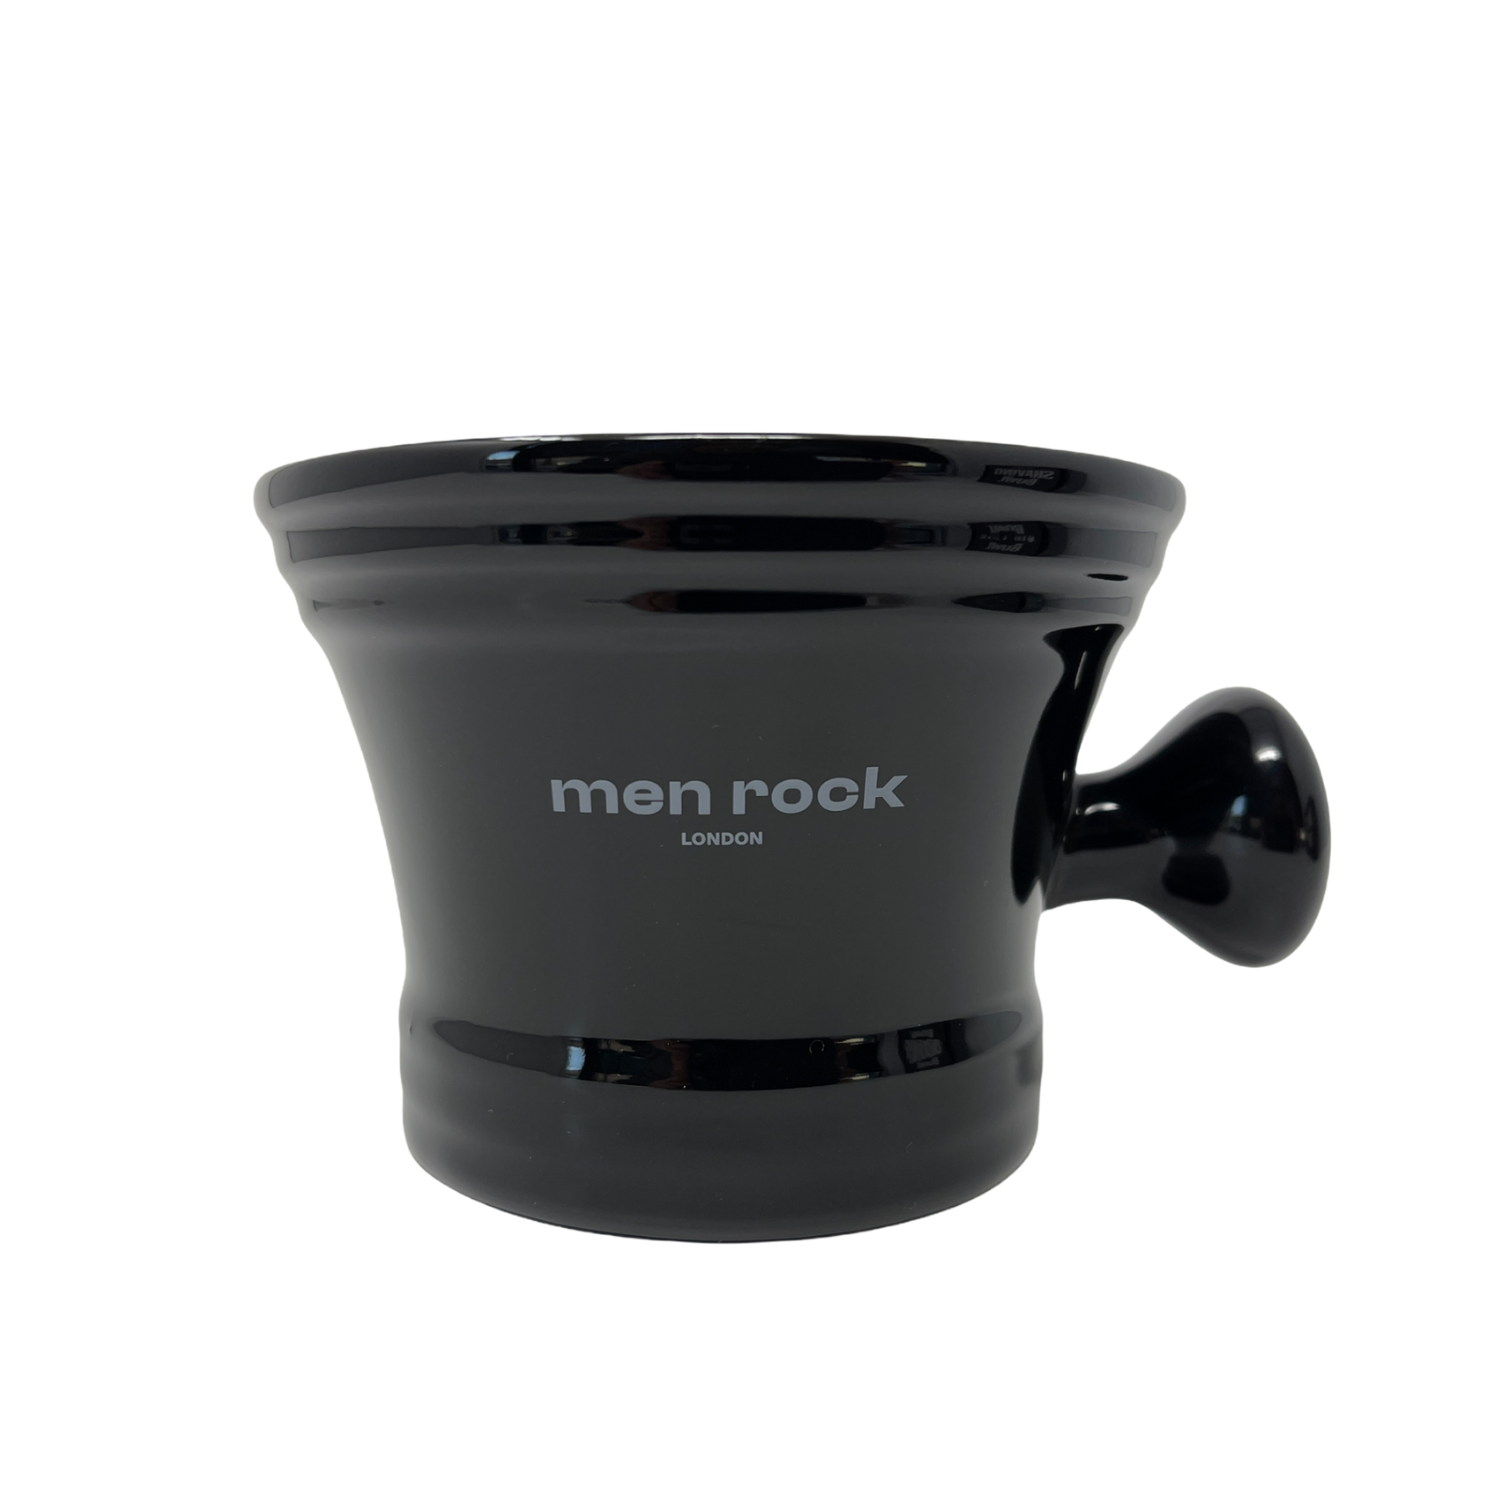 Porcelain shaving bowl with a handle with Men Rock logo